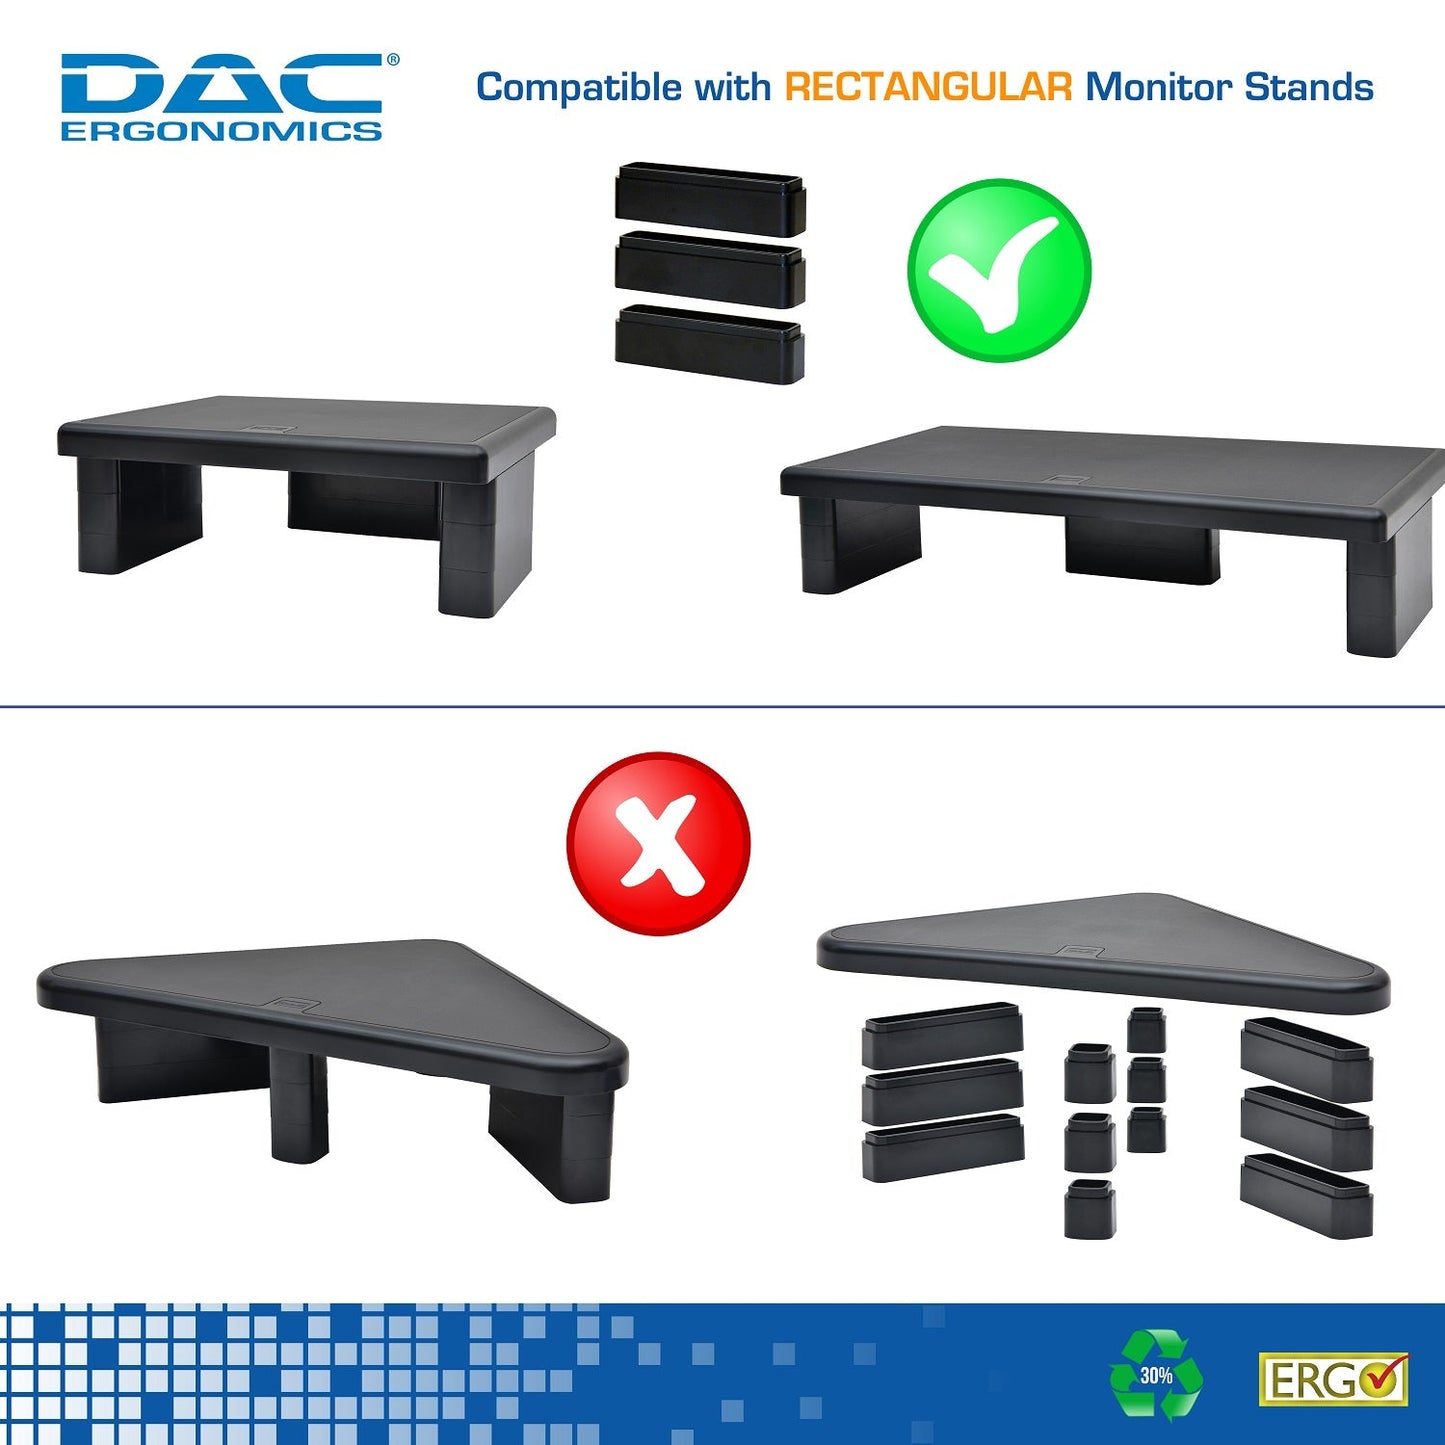 DAC® Stax™ MP-216 Ergonomic Height-Adjustable Monitor/Laptop Riser Blocks Kit, Black